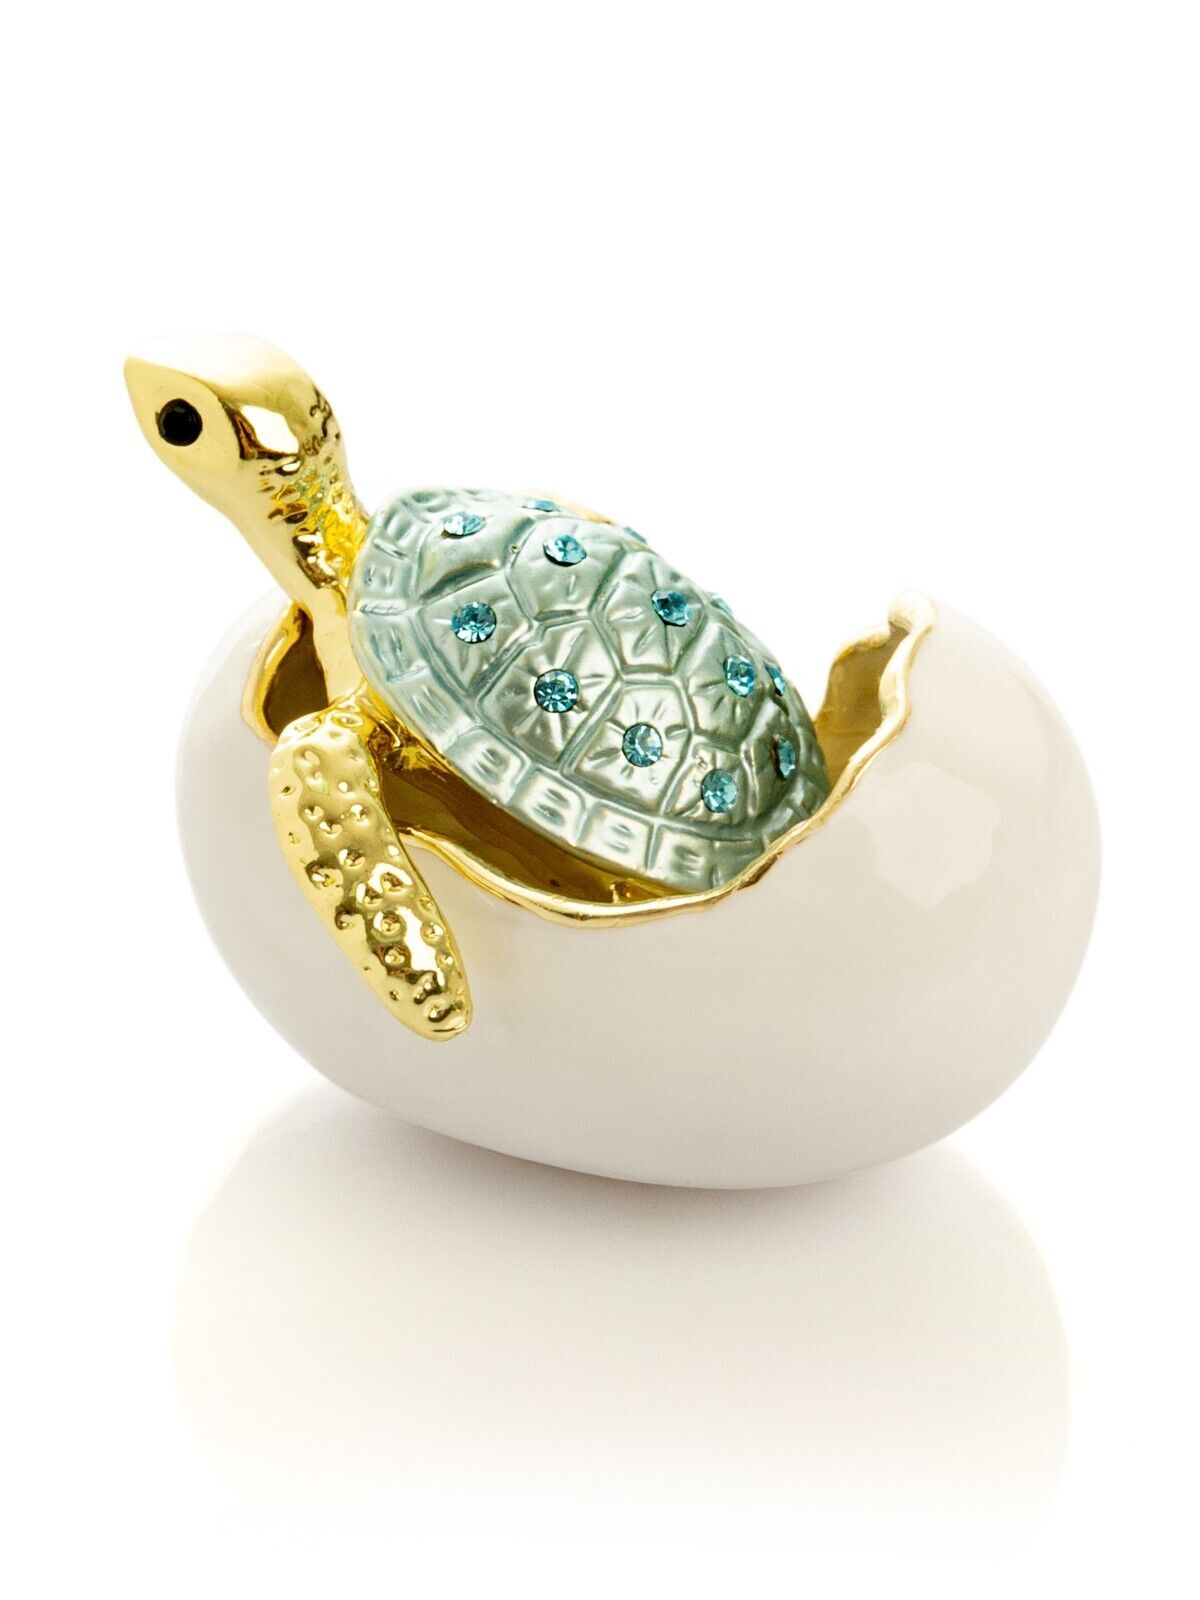 Keren Kopal A Turtle hatches  Trinket box  Decorated with Austrian Crystals